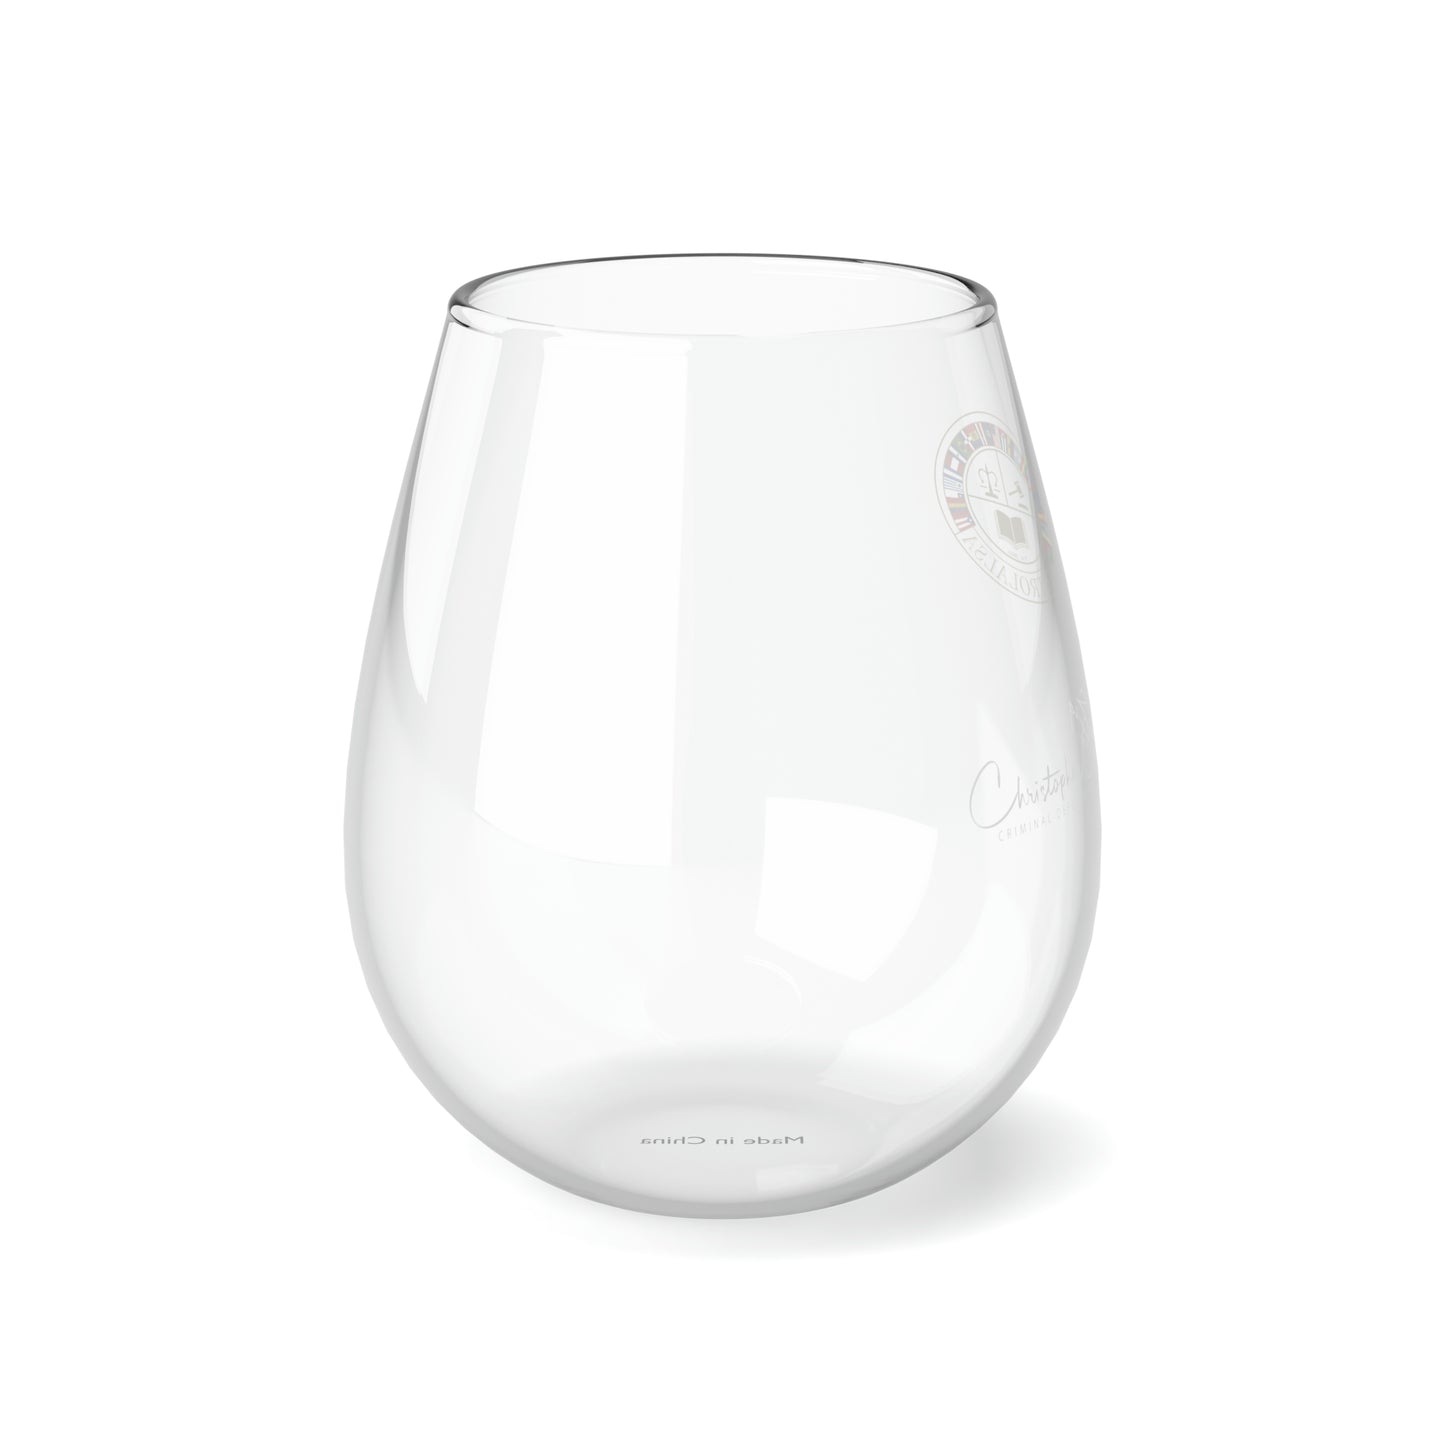 CLG x ML Stemless Wine Glass, 11.75oz